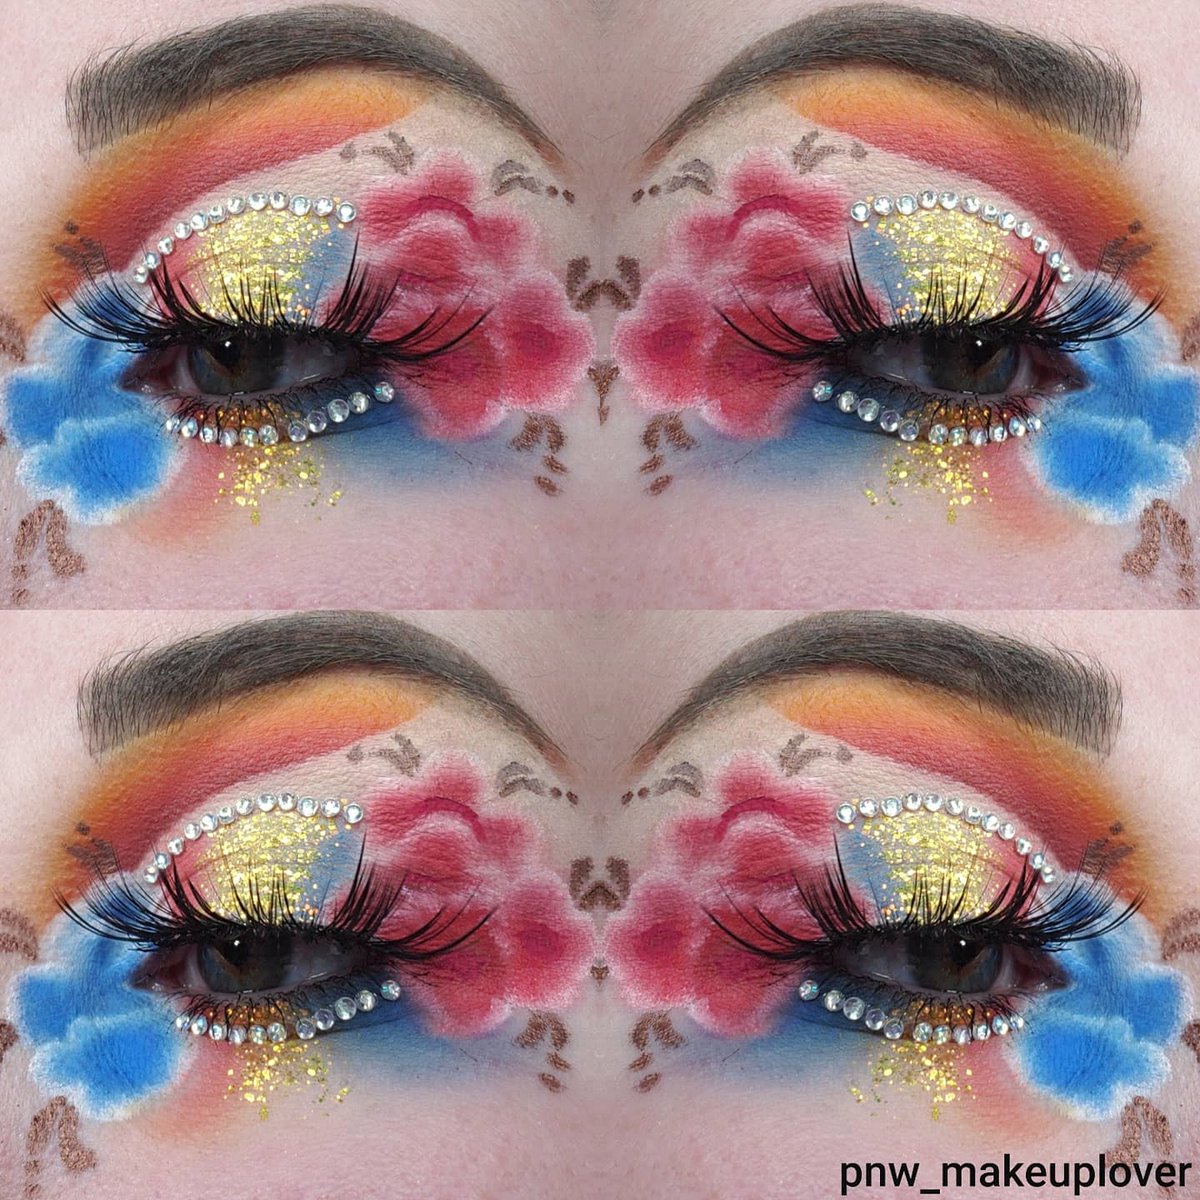 instagram.com/pnw_makeuplove… 
#makeup #Instagram #flowers #Recreation #cutcrease #makeupenthusiast #mue #newmua #colourpop #Morphe #MorpheBabe #jamescharlespalette